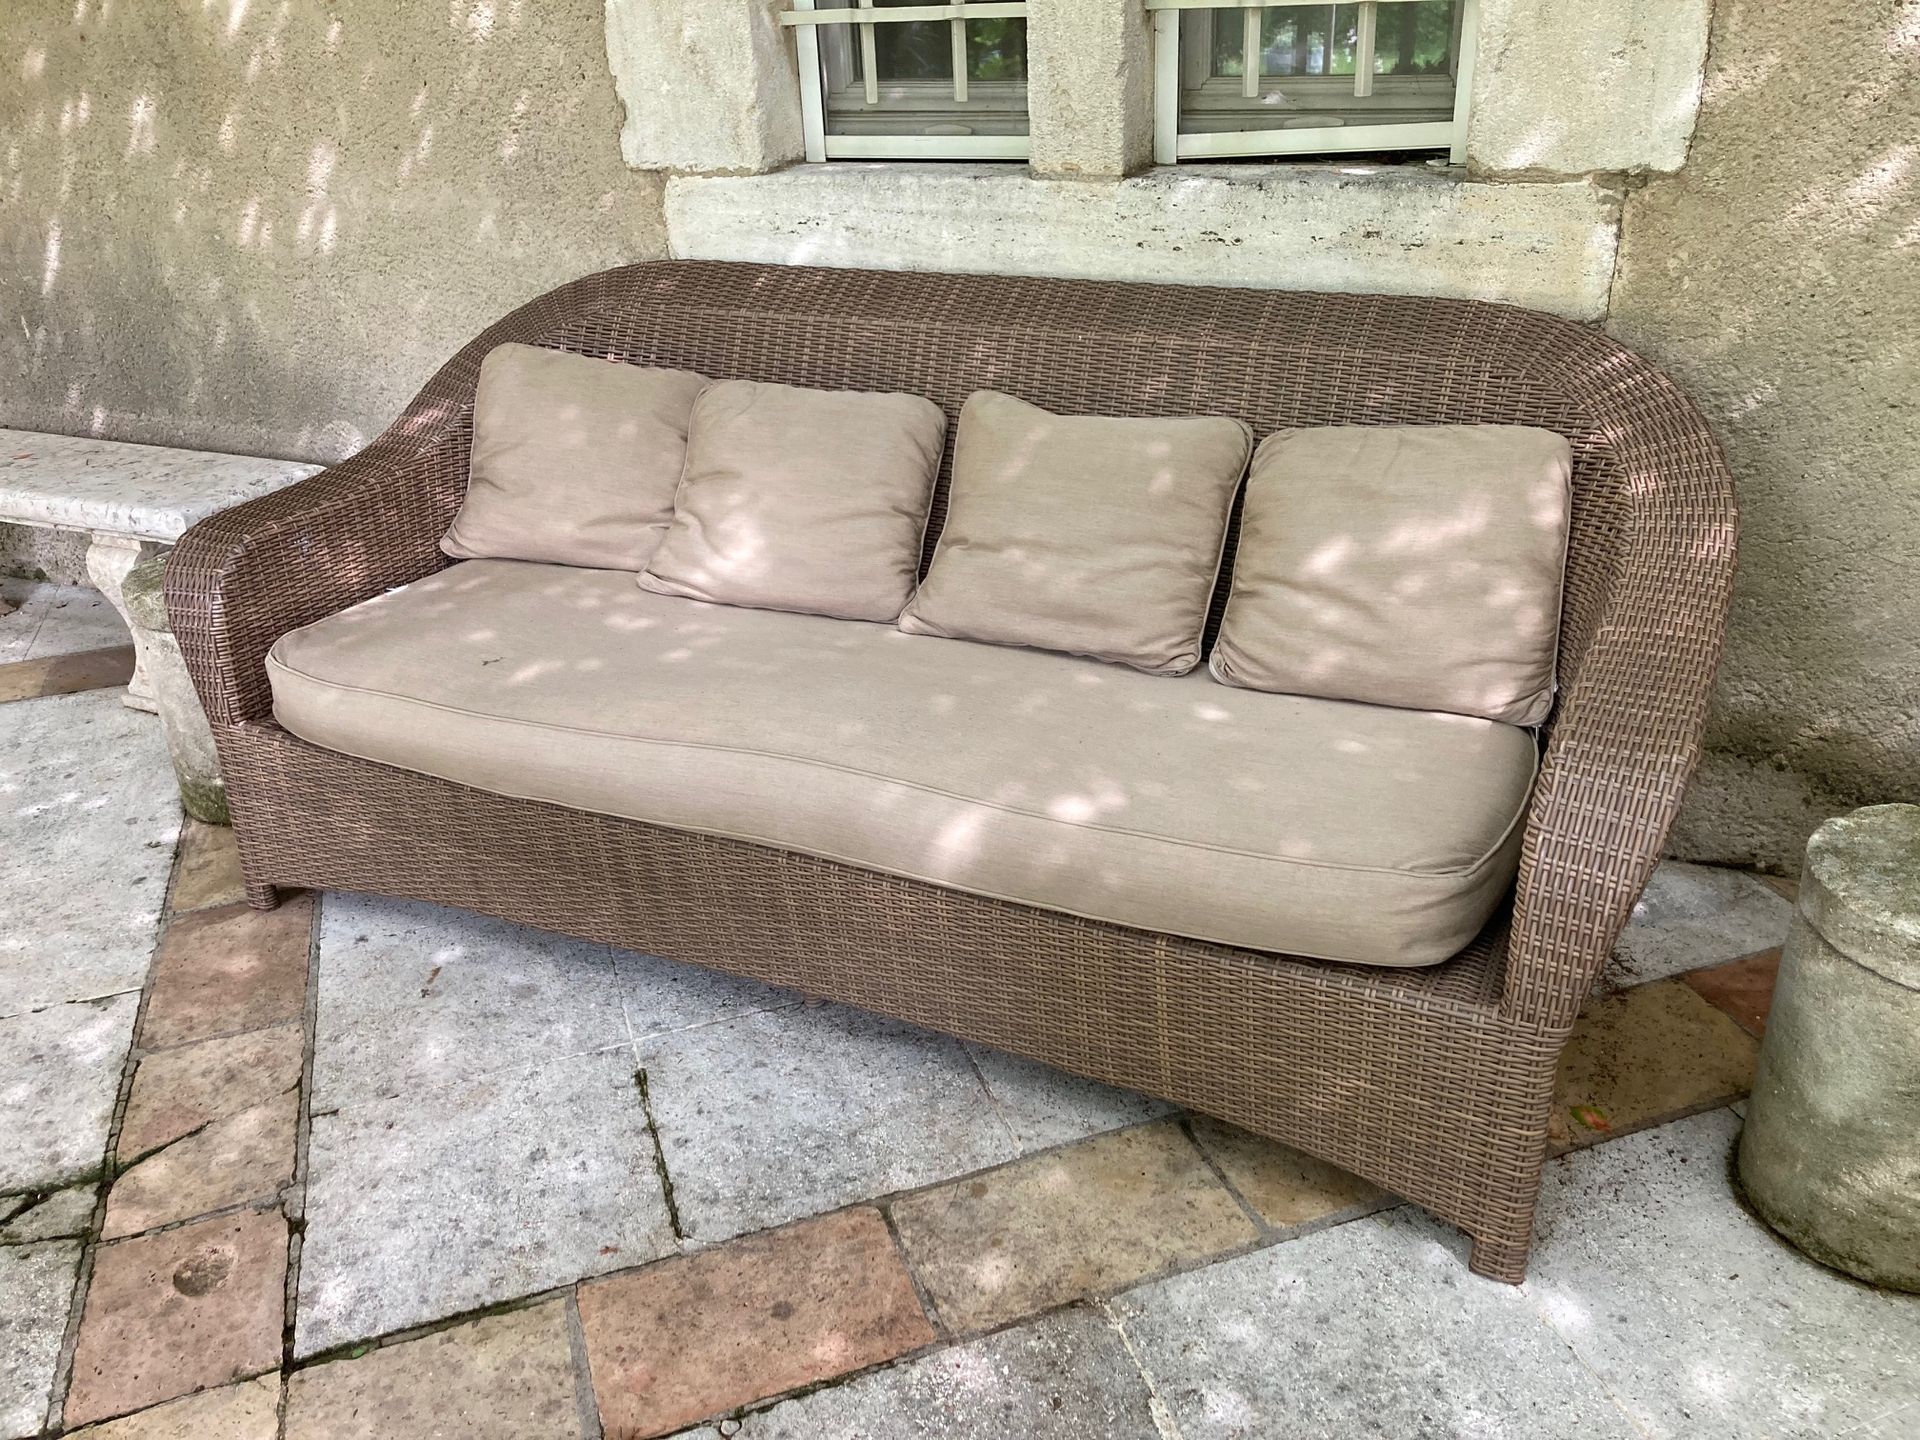 Null 塑料纤维编织的沙发
H.82 W. 207 D. 80 cm